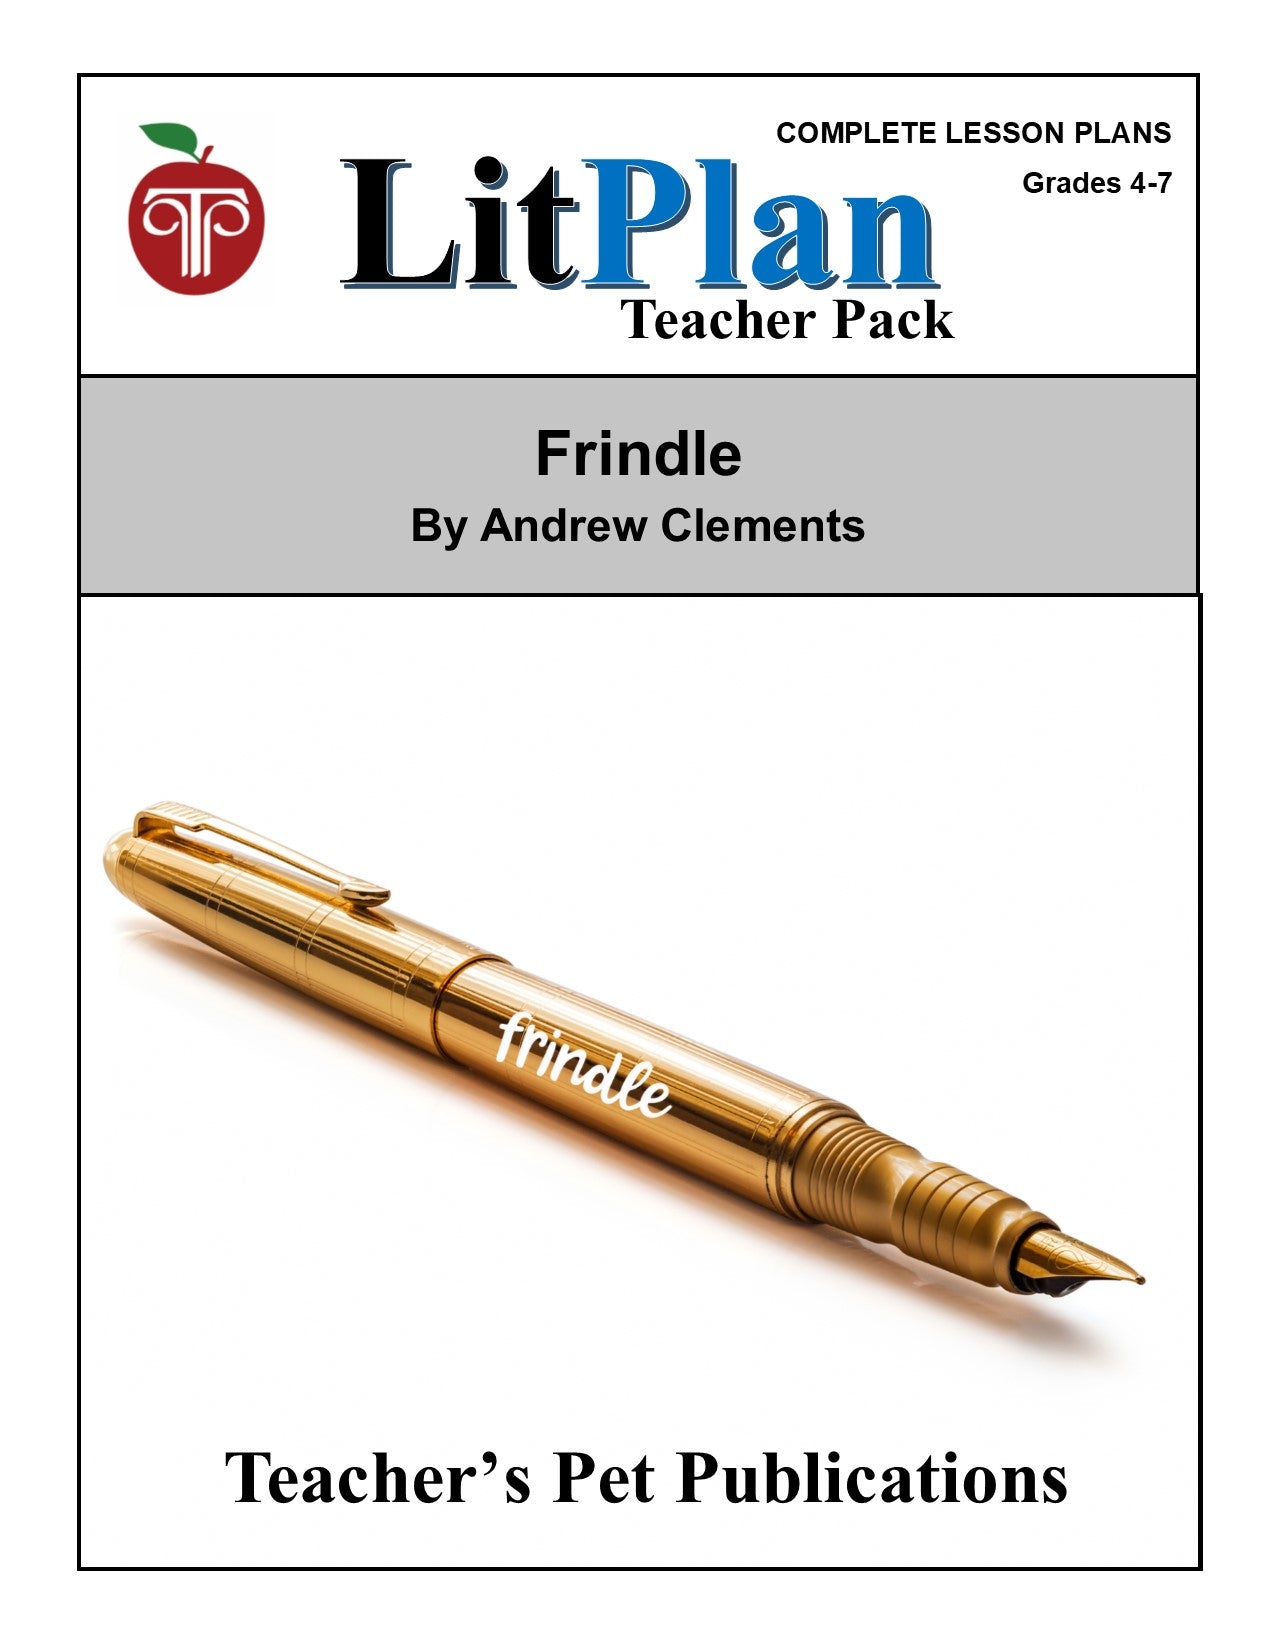 Frindle: LitPlan Teacher Pack Grades 4-7